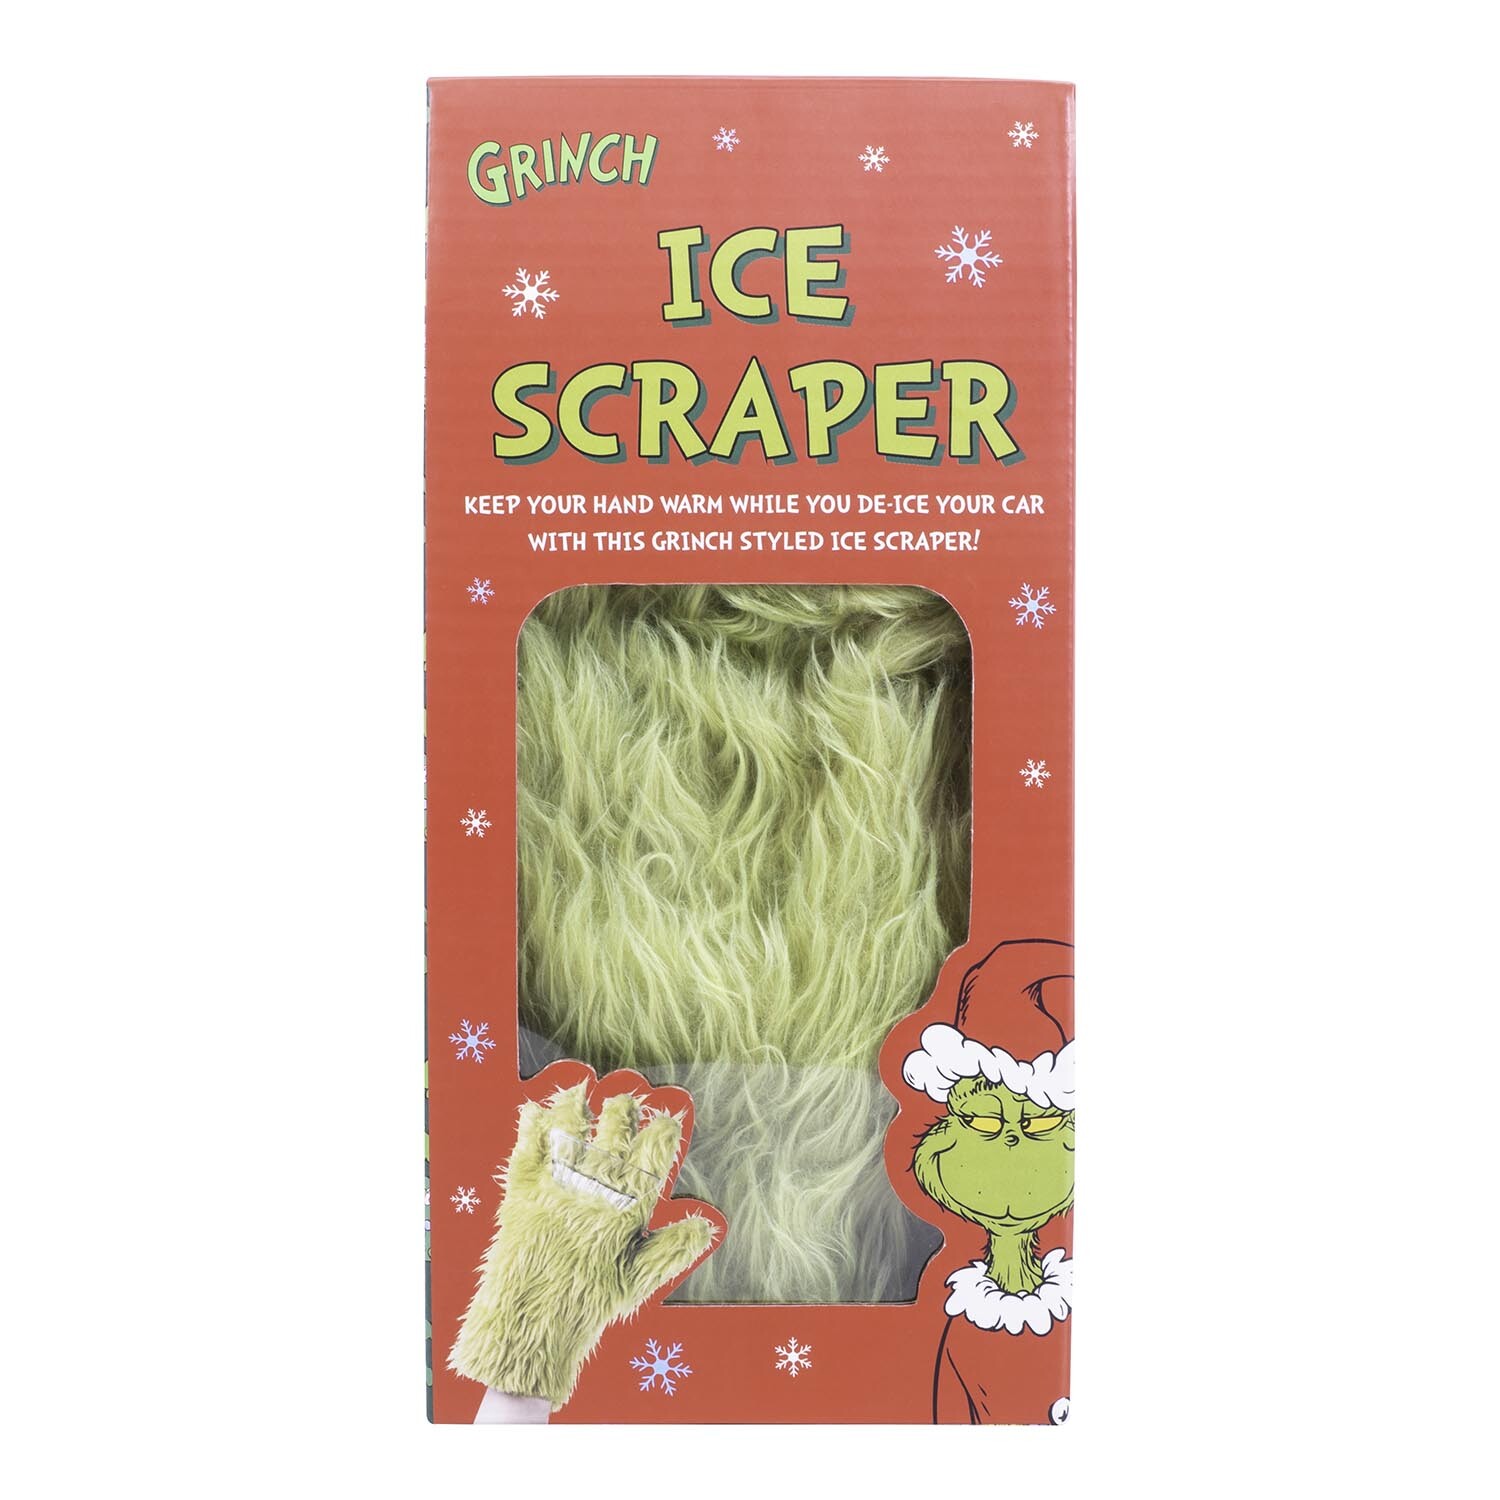 The Grinch Green Ice Scraper Image 1